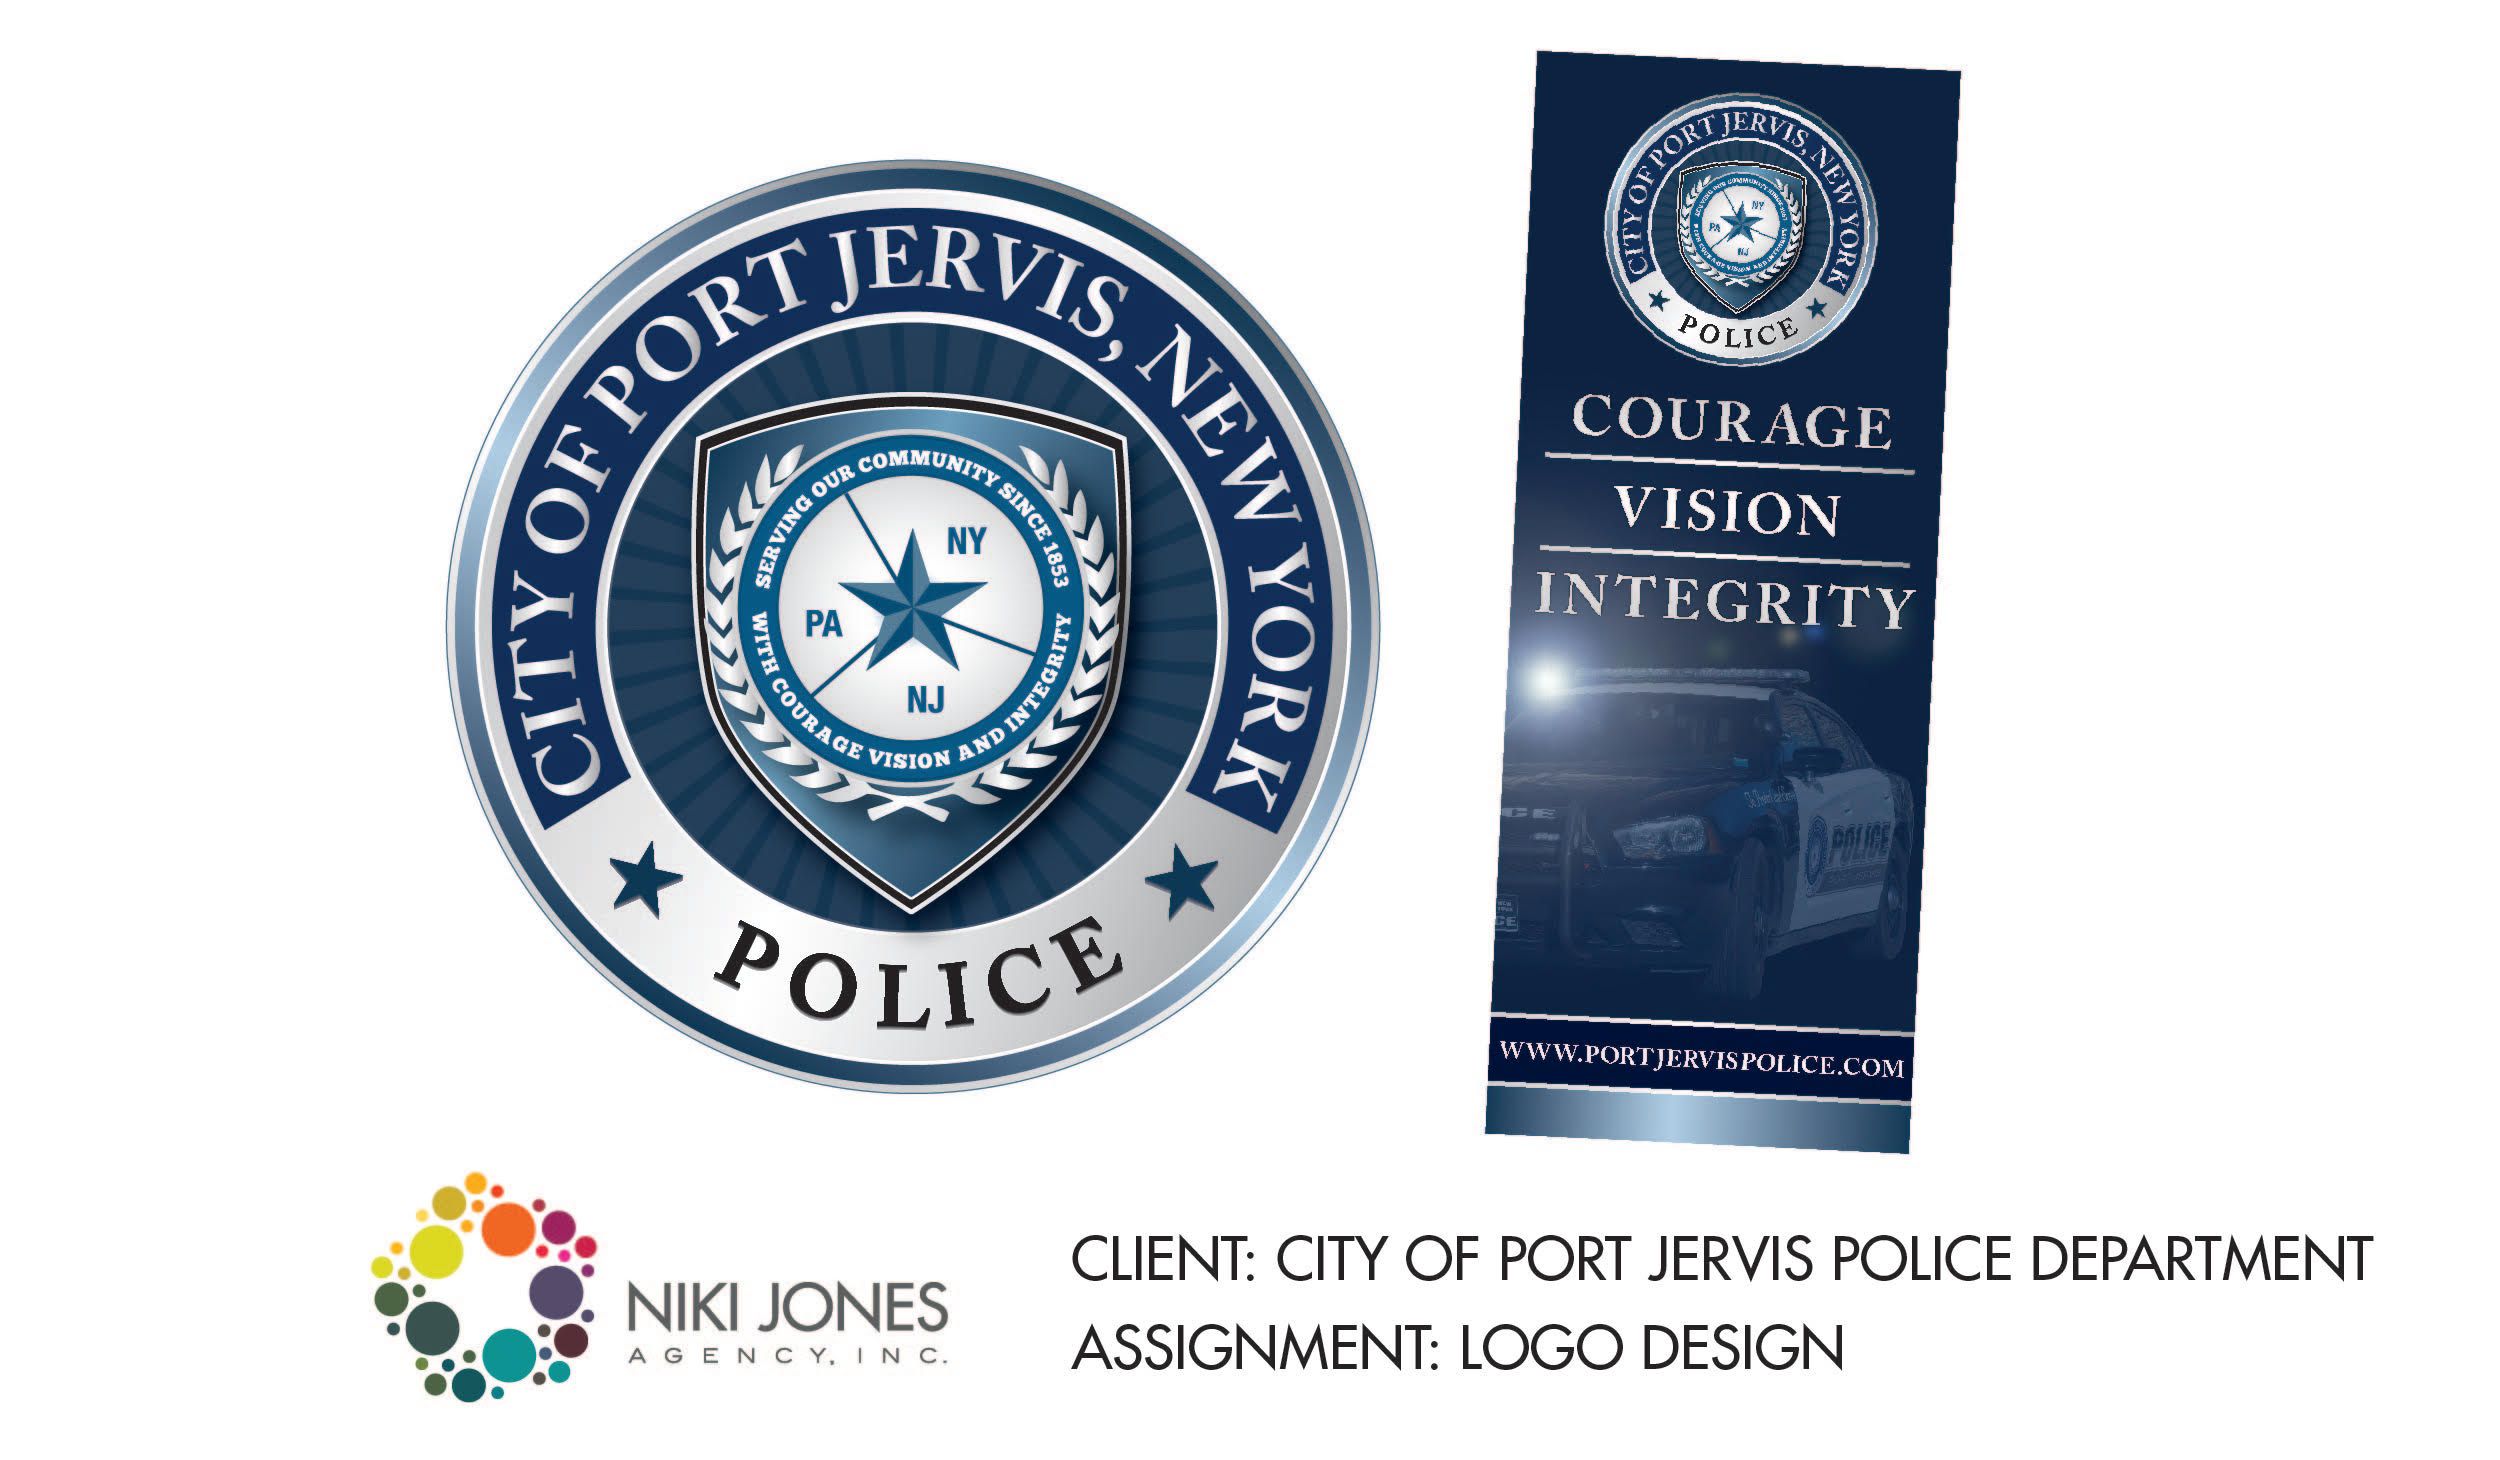 NJA Portfolio - Port Jervis Police Department Featured Work